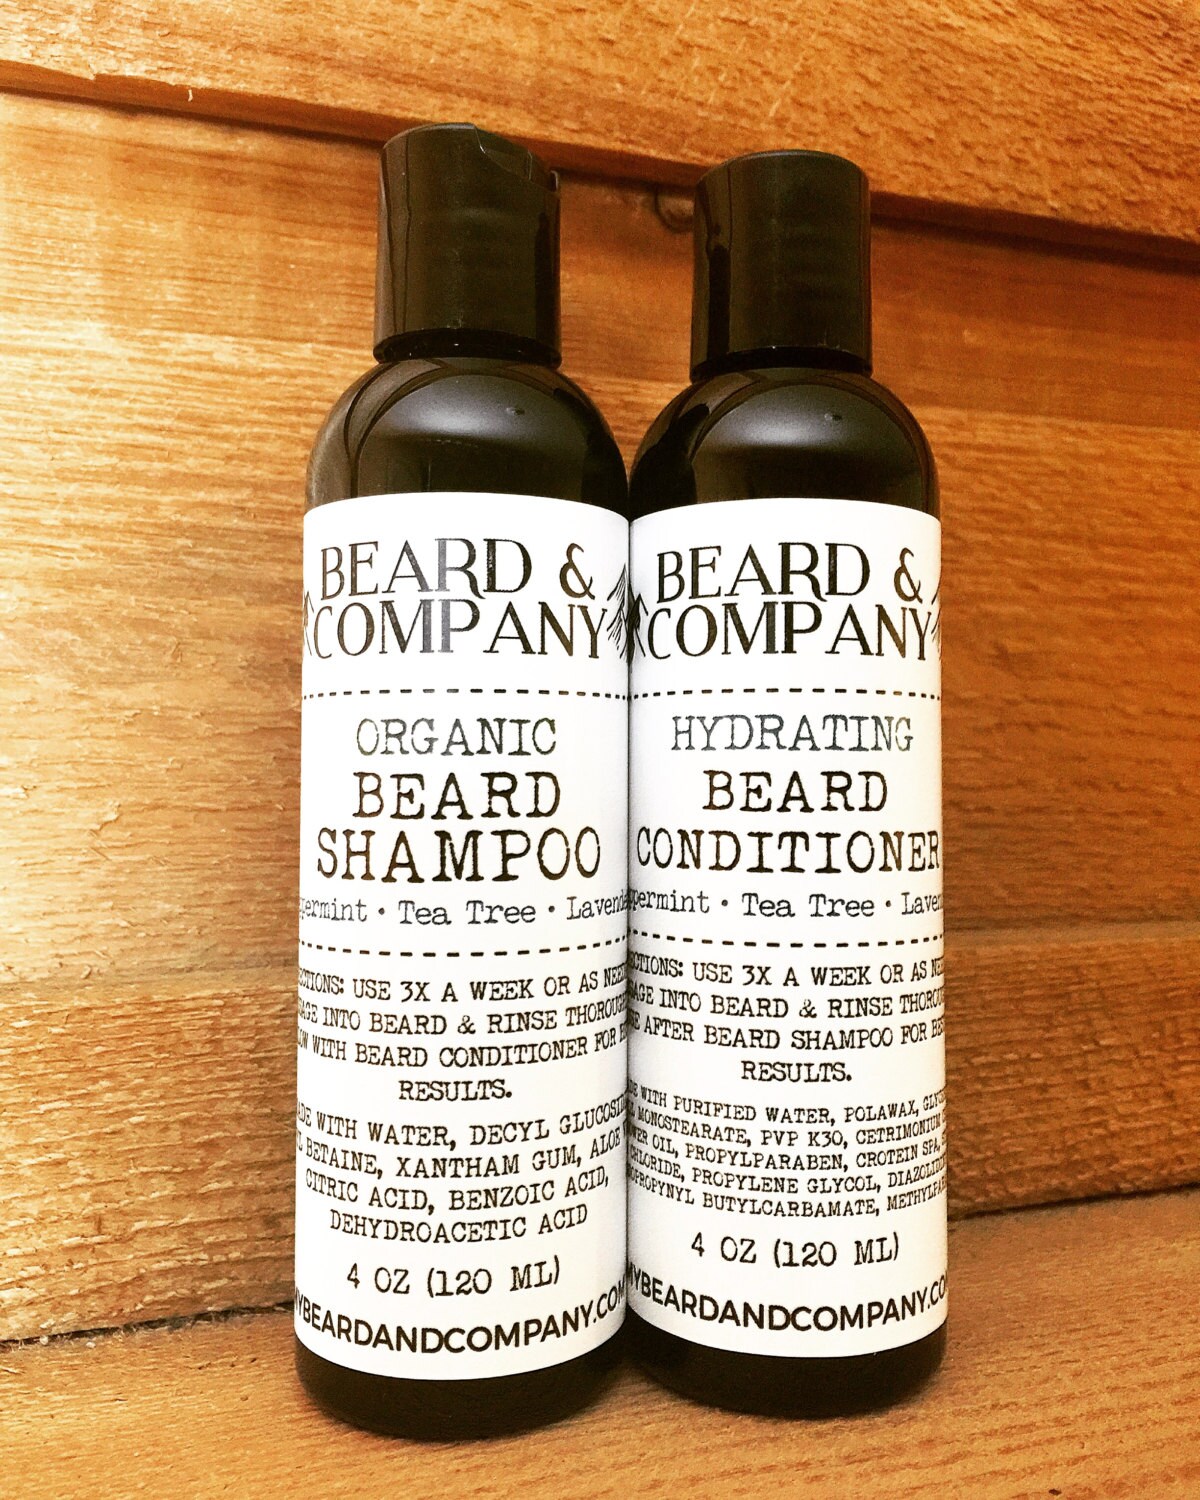 Beard shampoo and conditioner